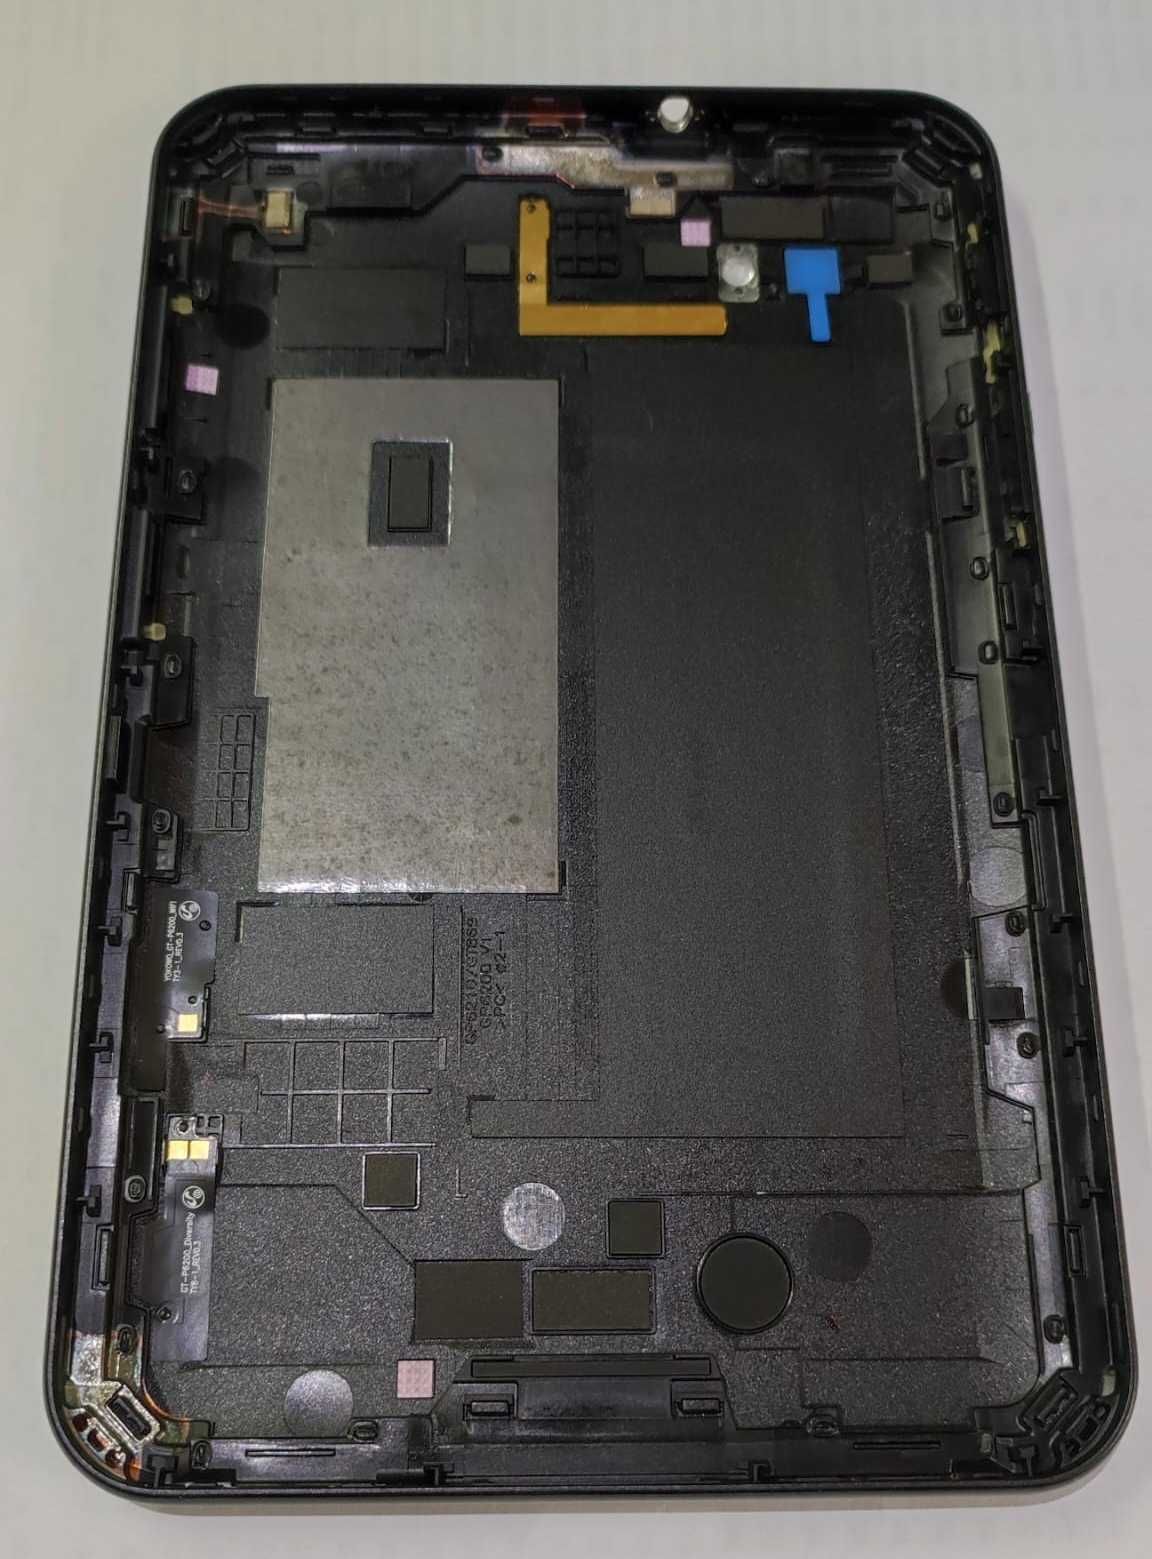 NOU Carcasa spate tablete Samsung Galaxy Tab 7.0 Plus P6200